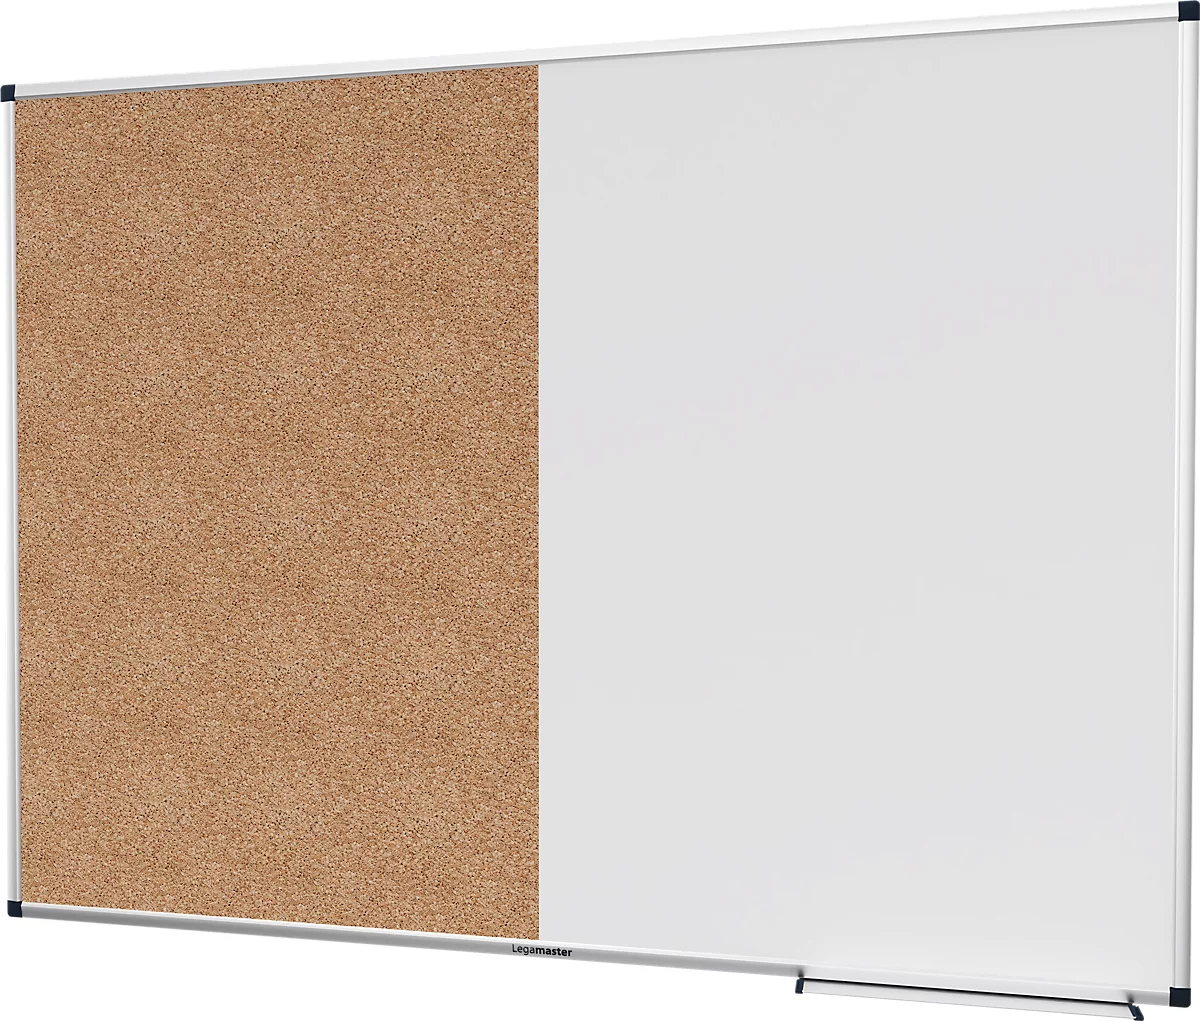 PROFESSIONAL tableau blanc rotatif 90x120cm